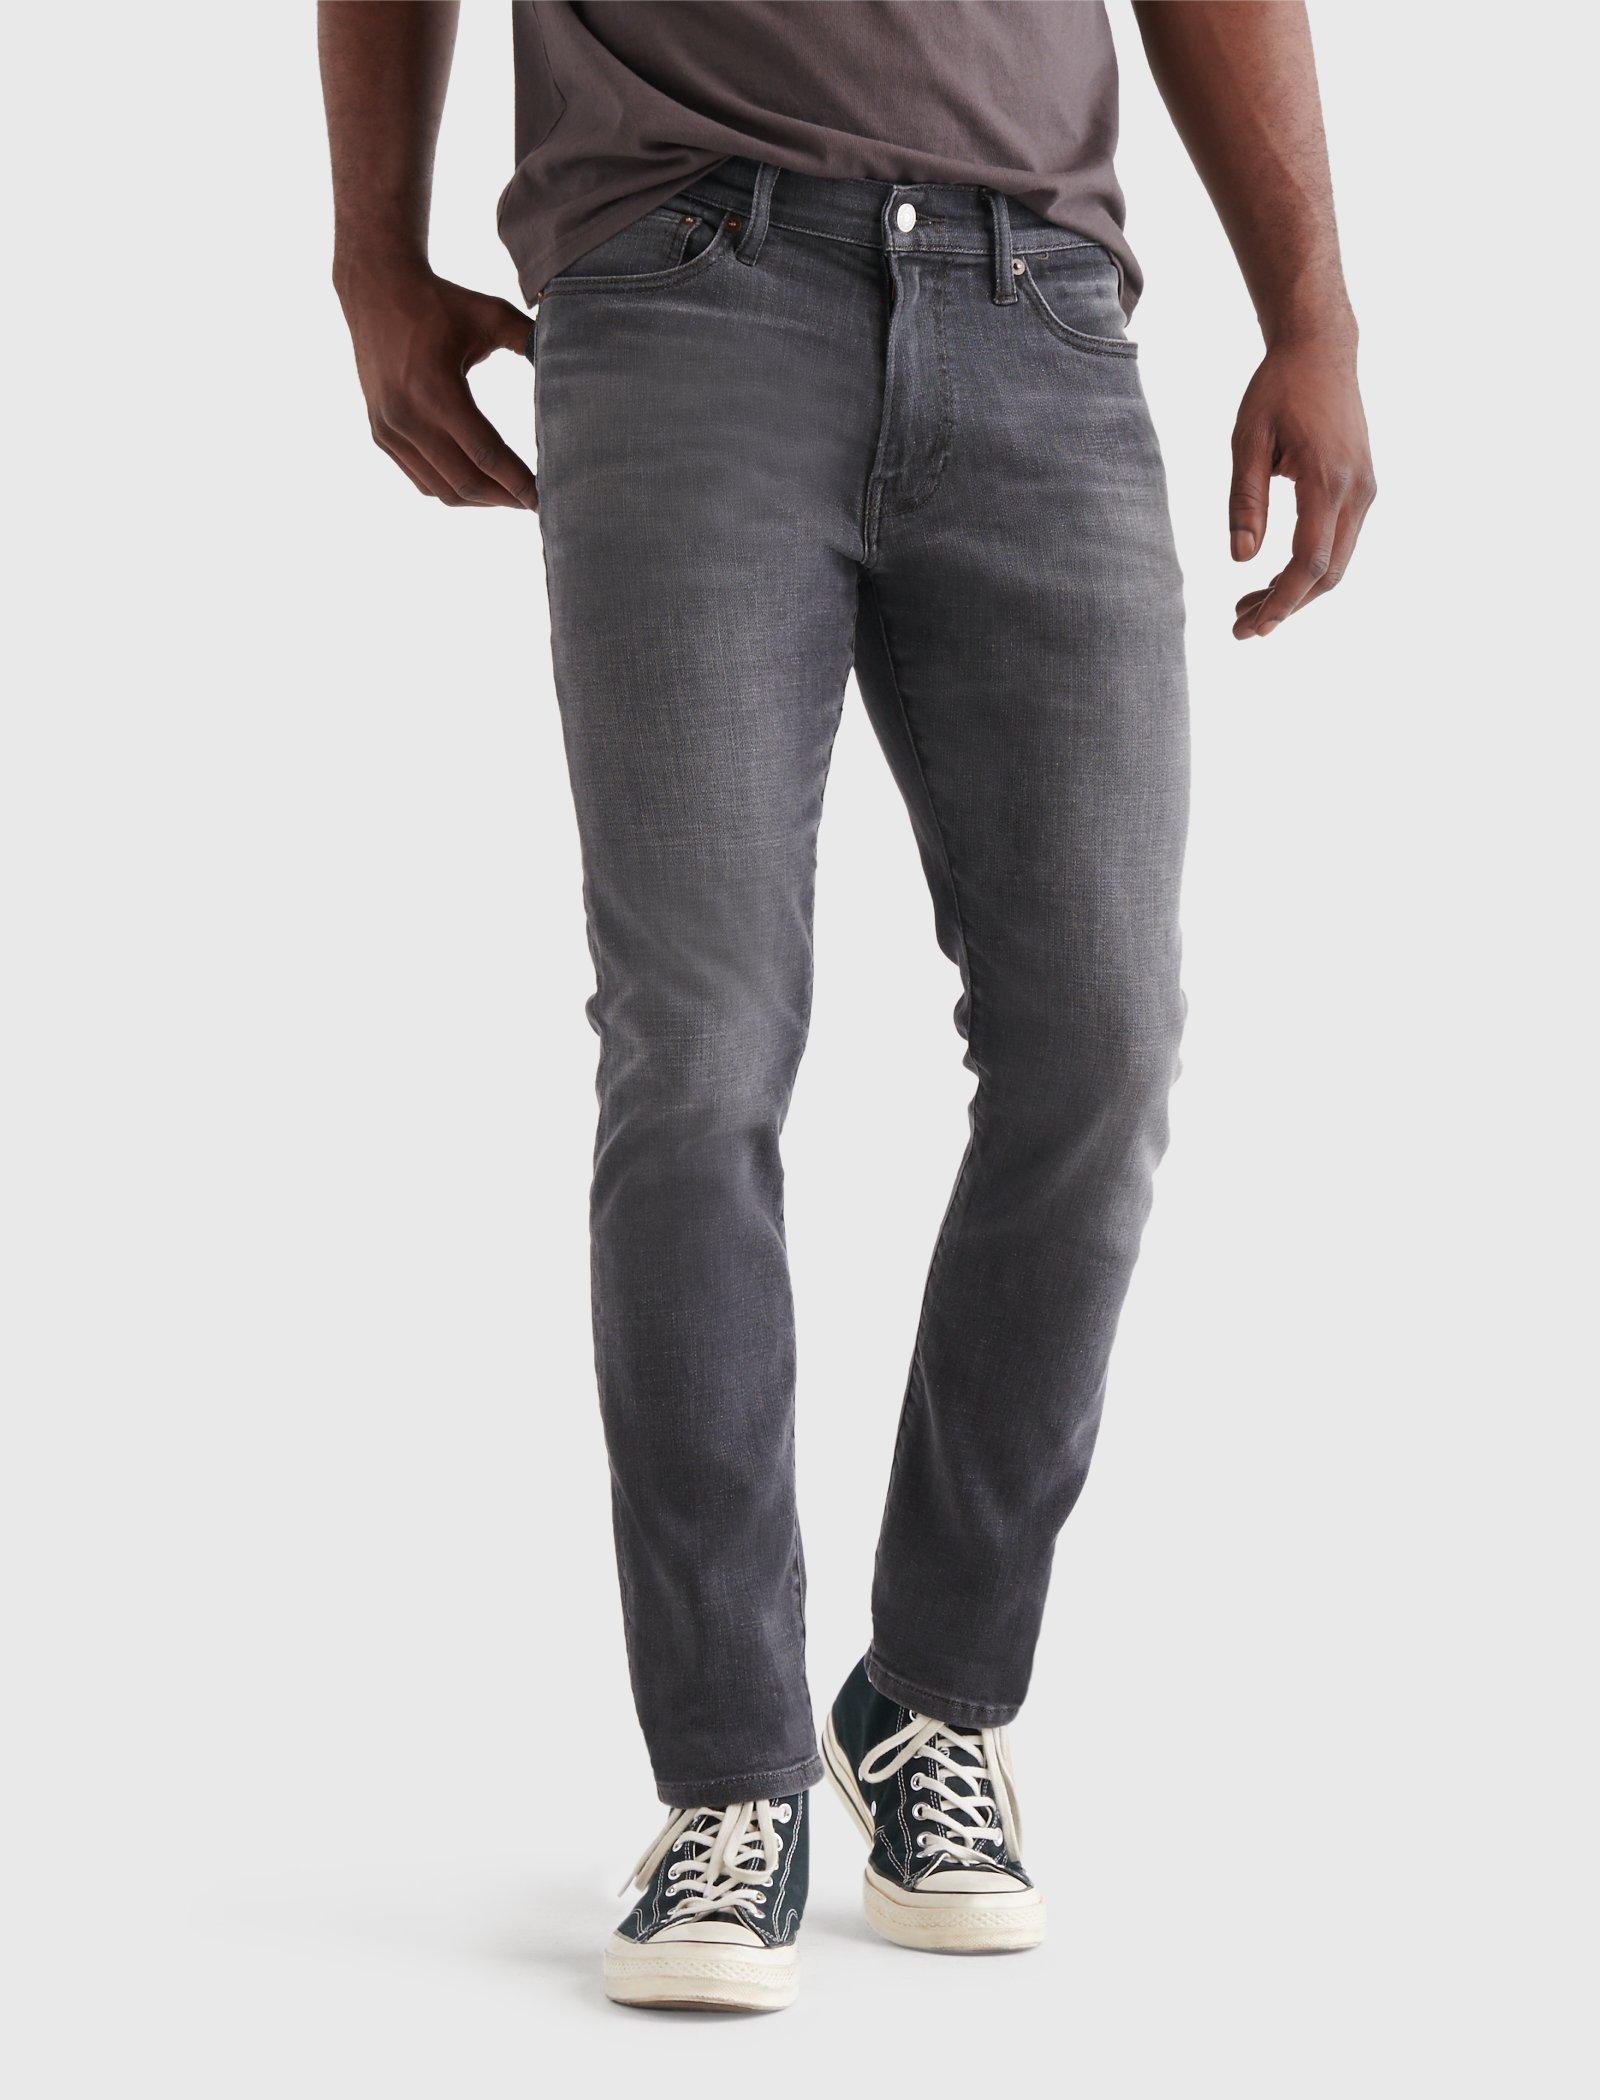 lucky brand men's stretch jeans